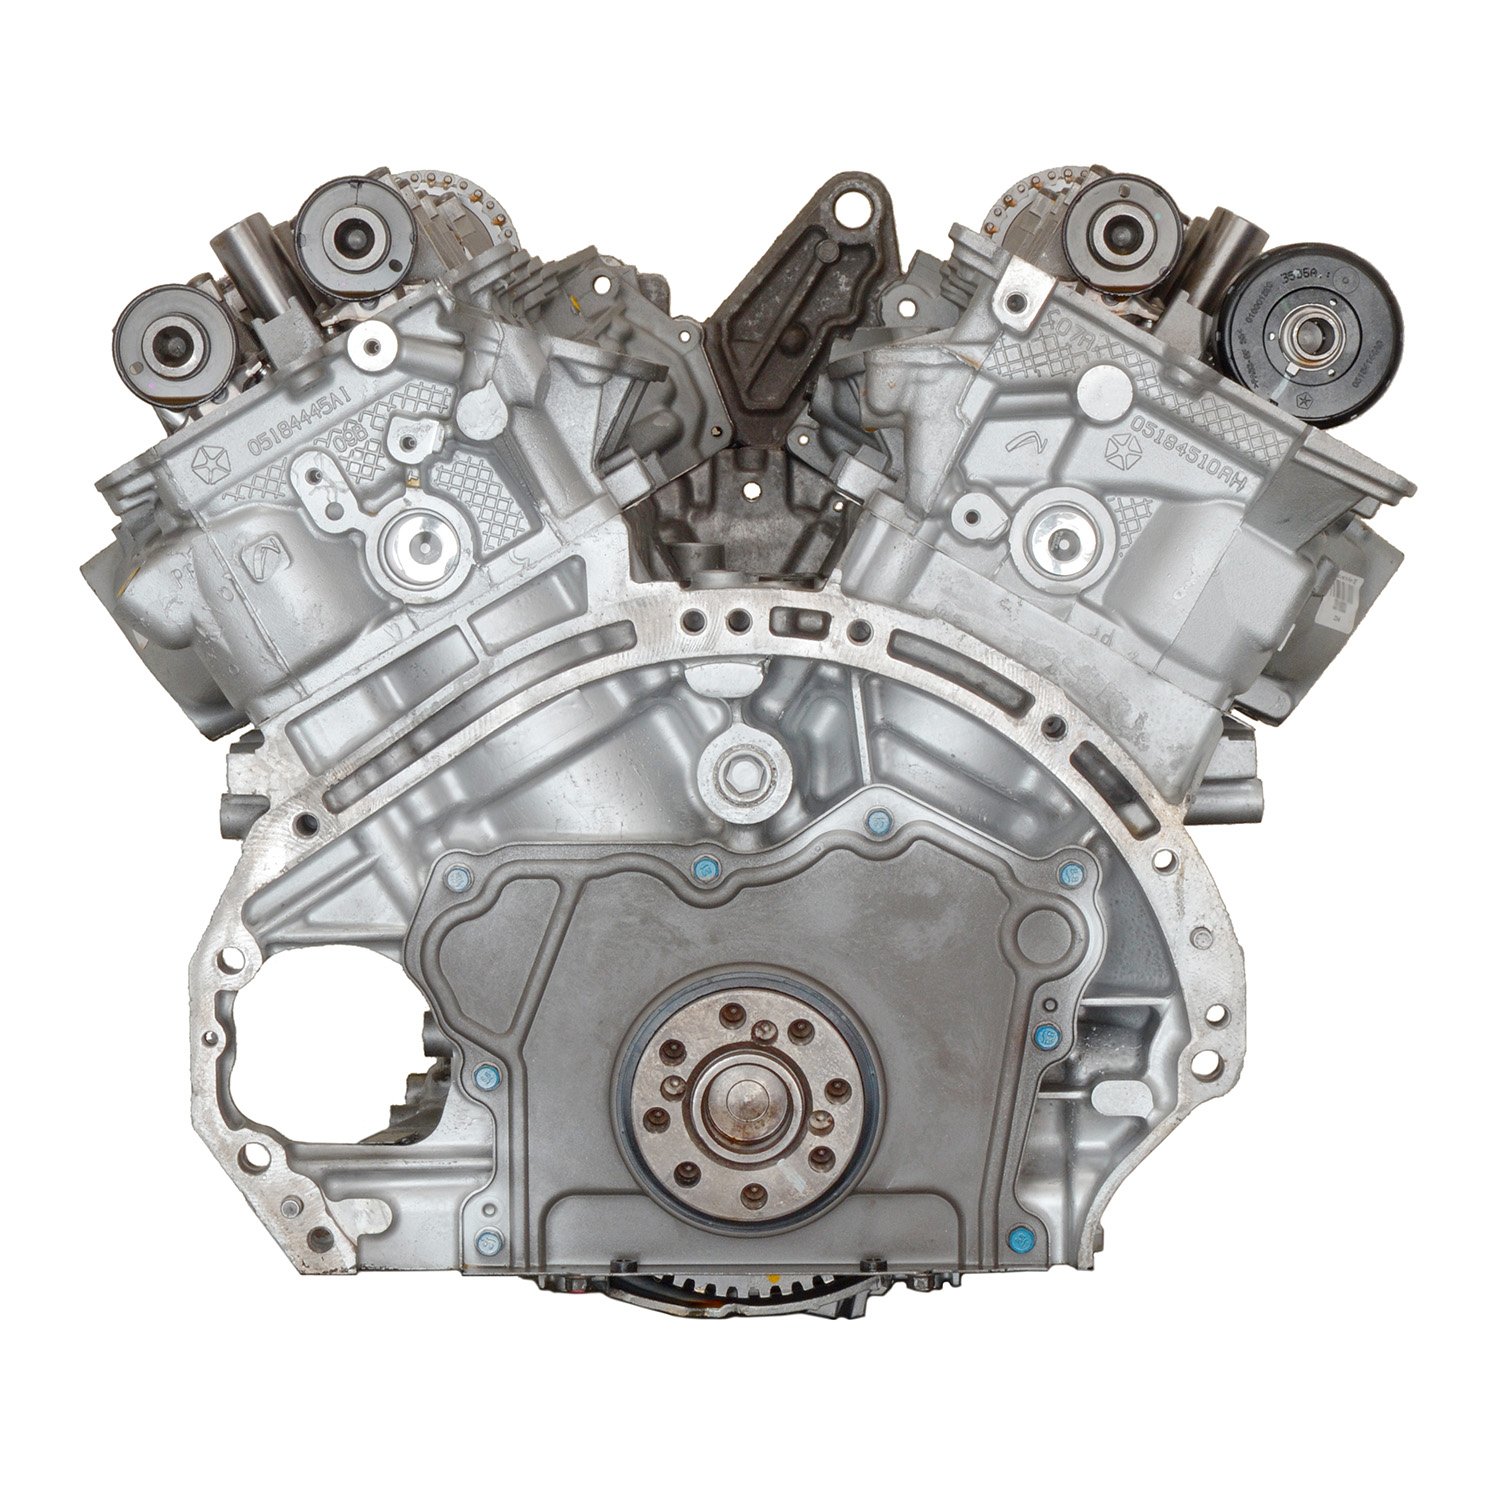 Transmision Motor Mount V6 3.6 L for 2012-2013 Jeep Wrangler